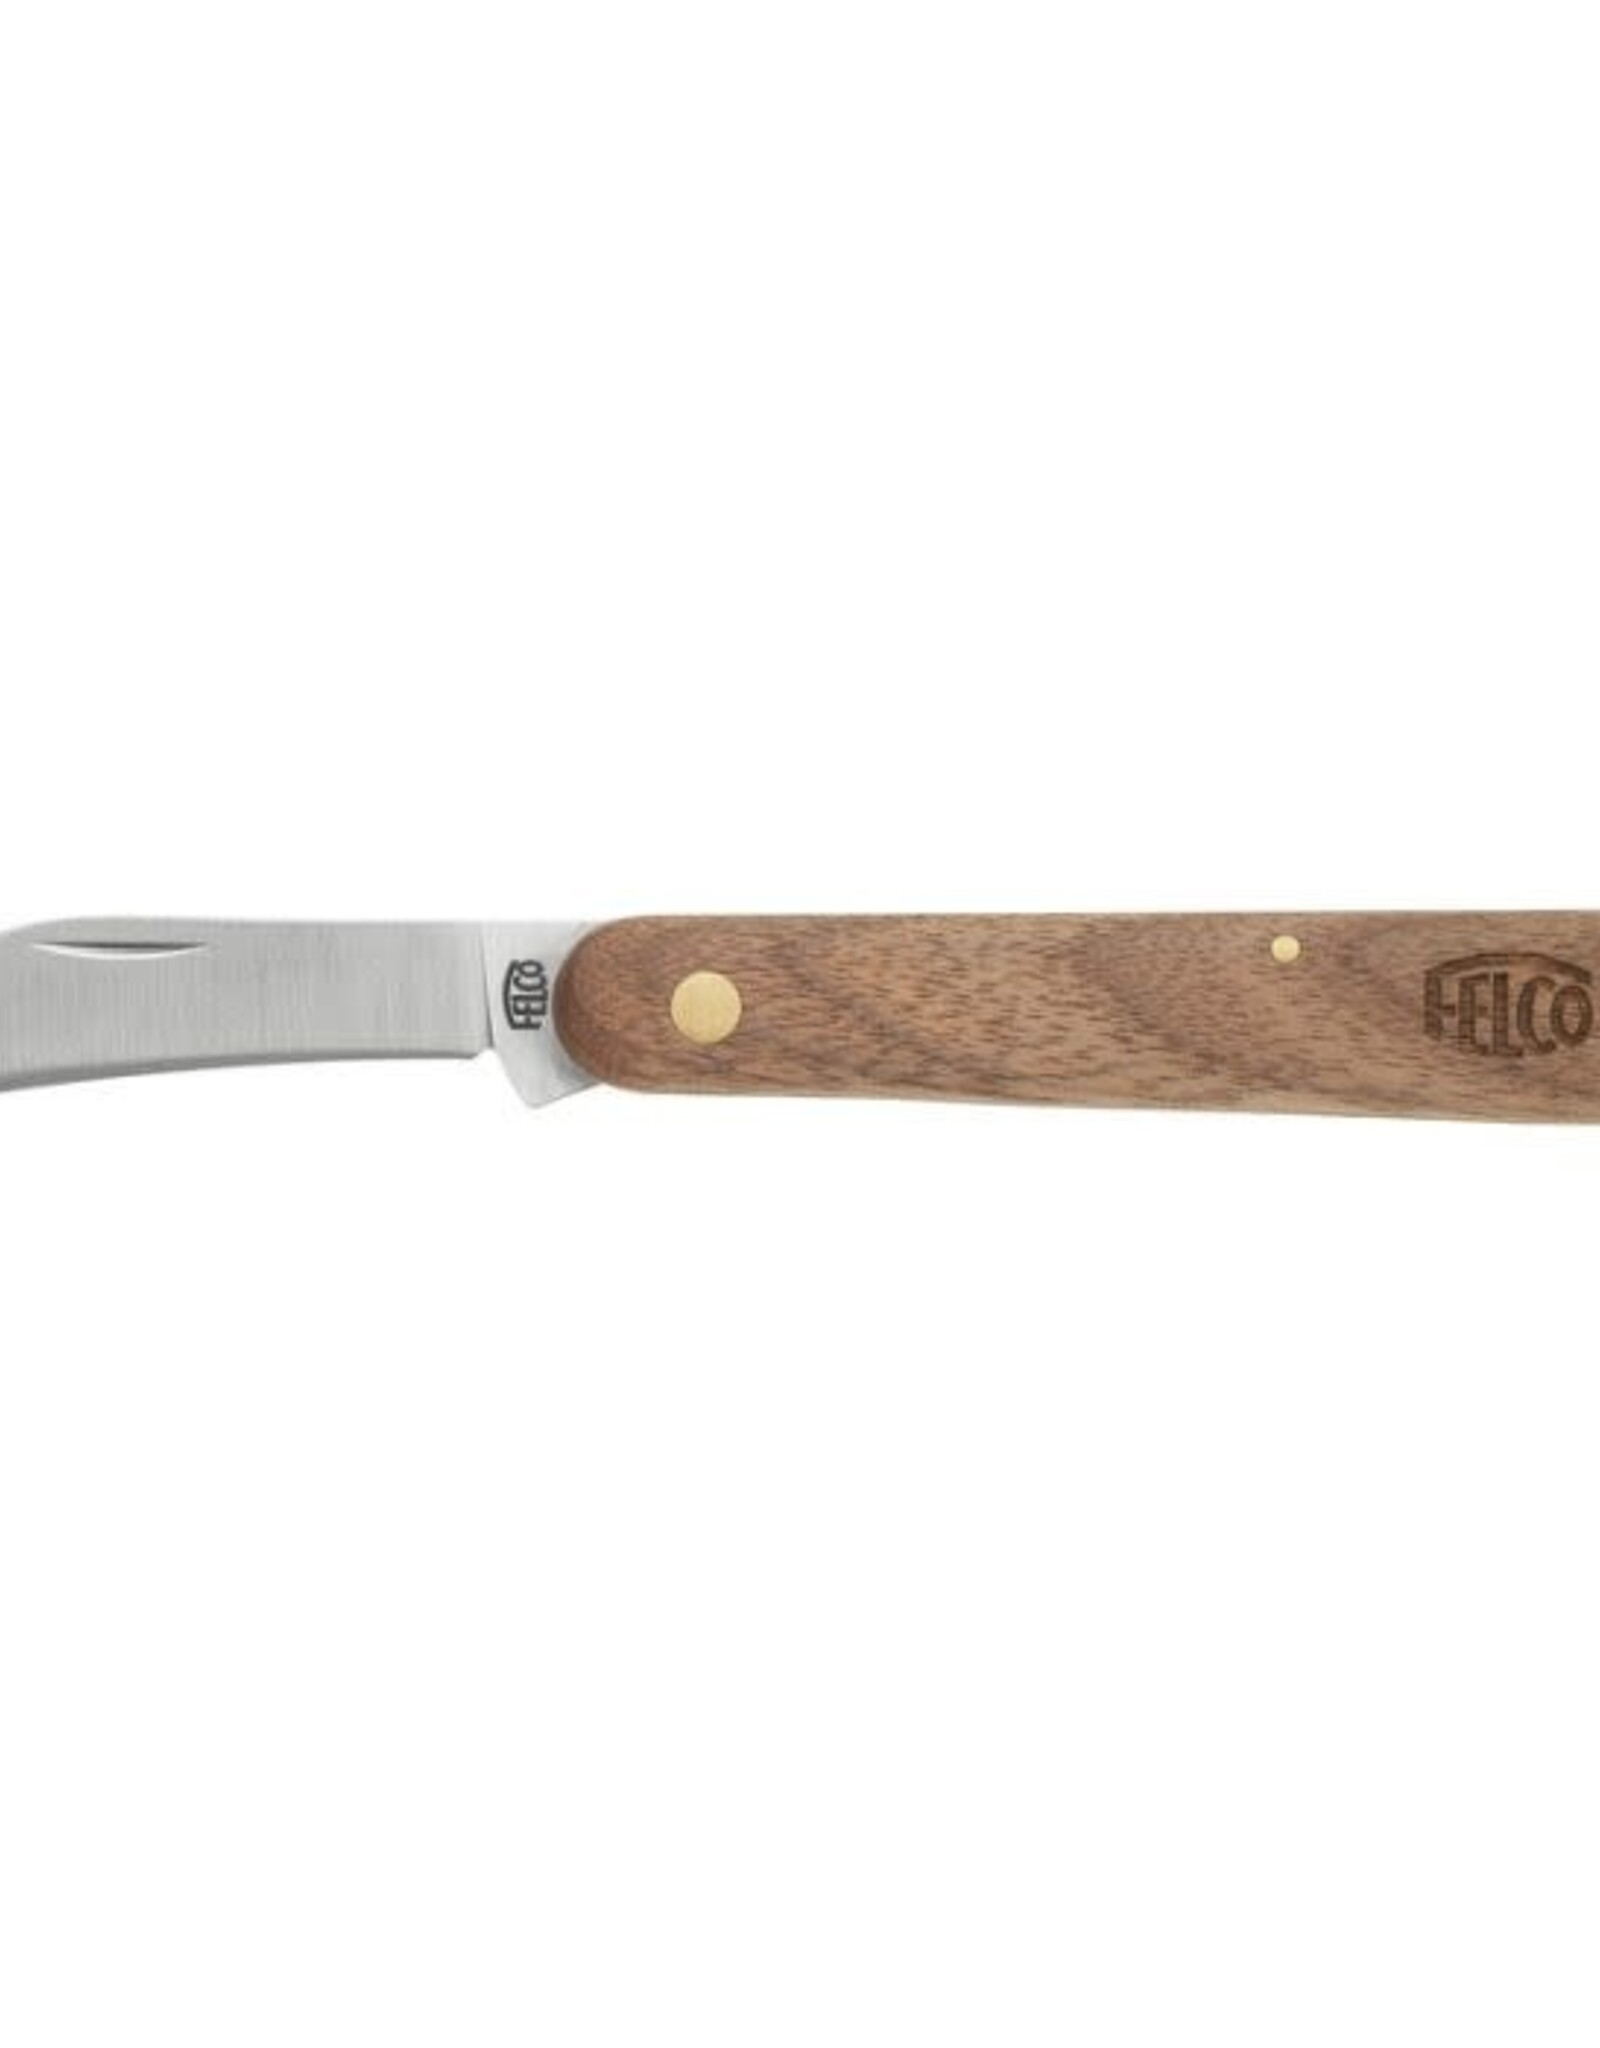 Felco 511 - Pruning & grafting knife